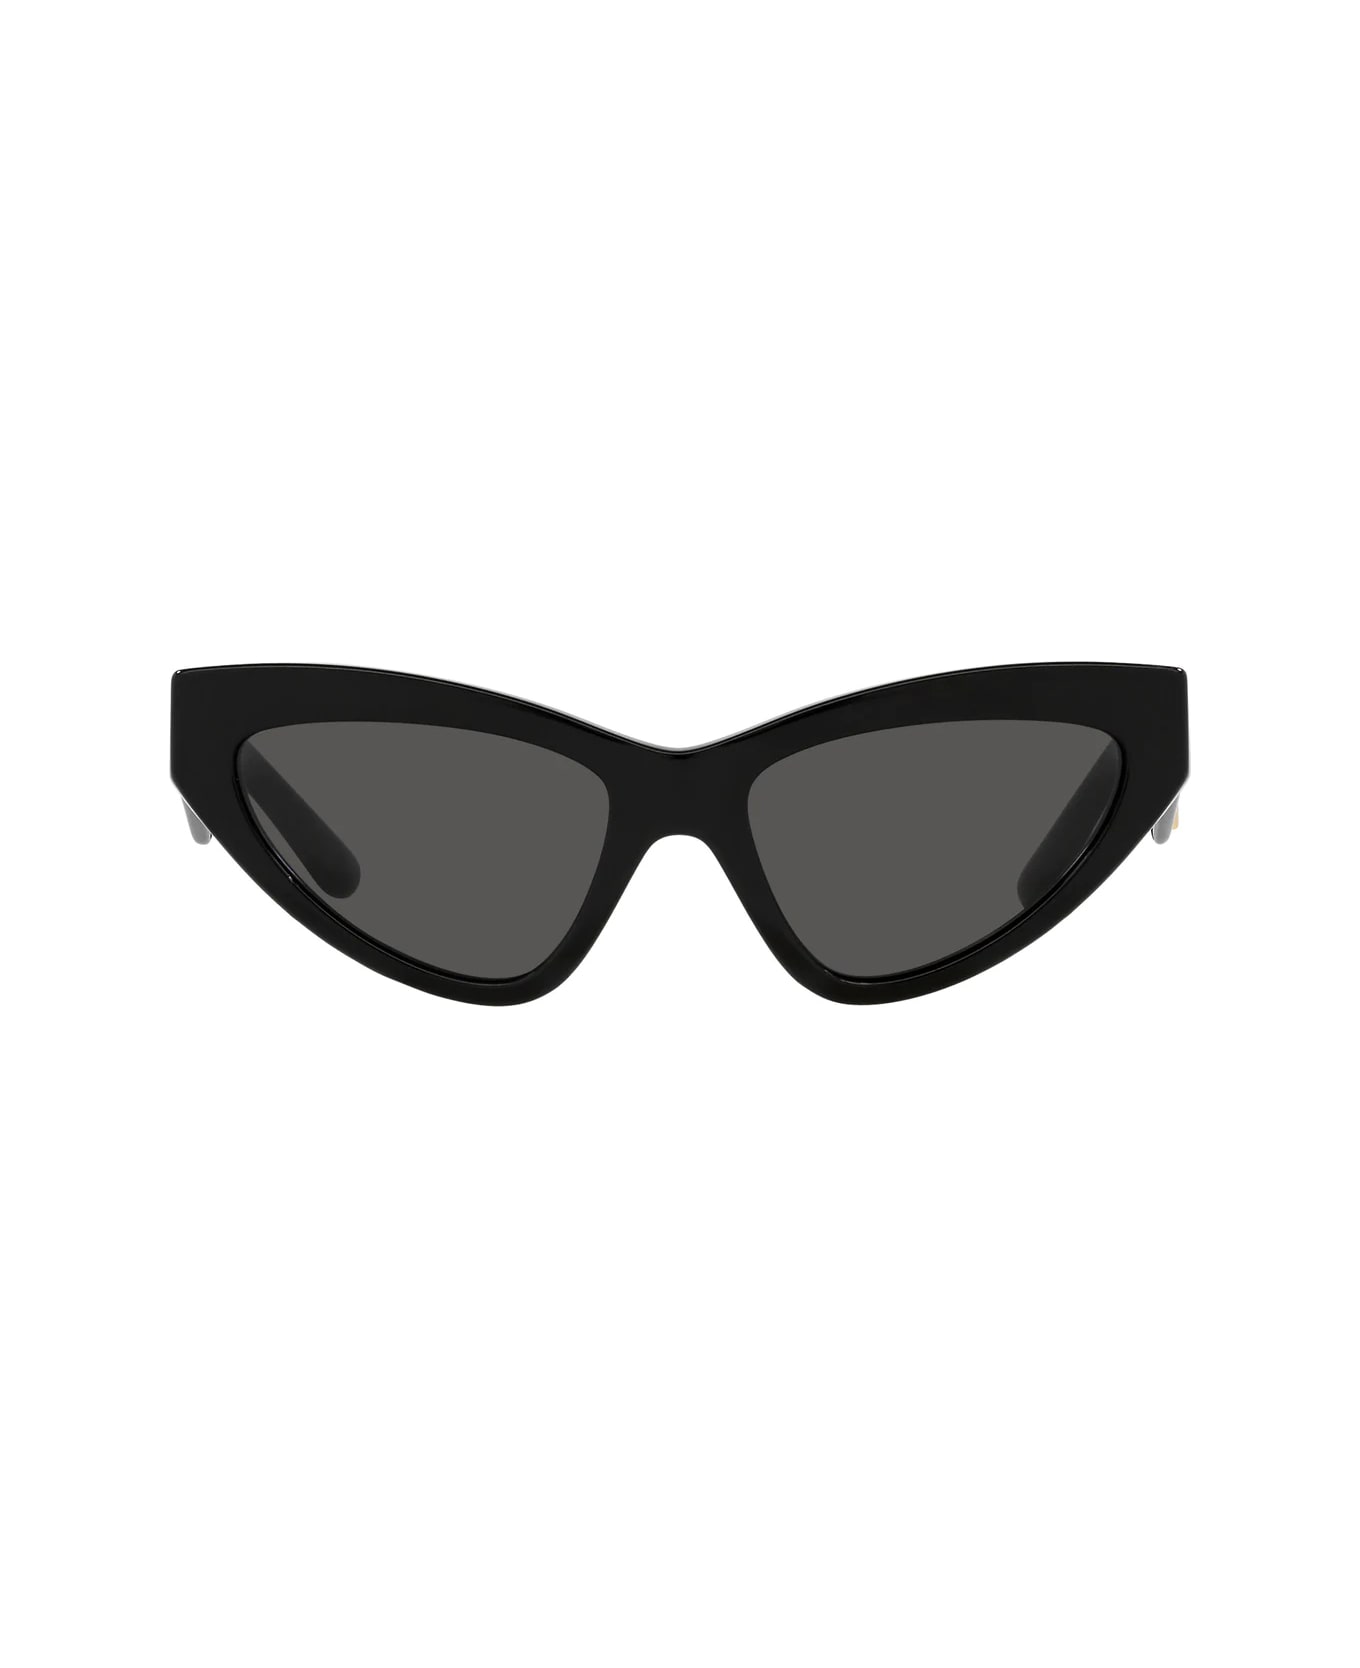 Dolce & Gabbana Eyewear Dg4439 501/87 Sunglasses - Nero サングラス